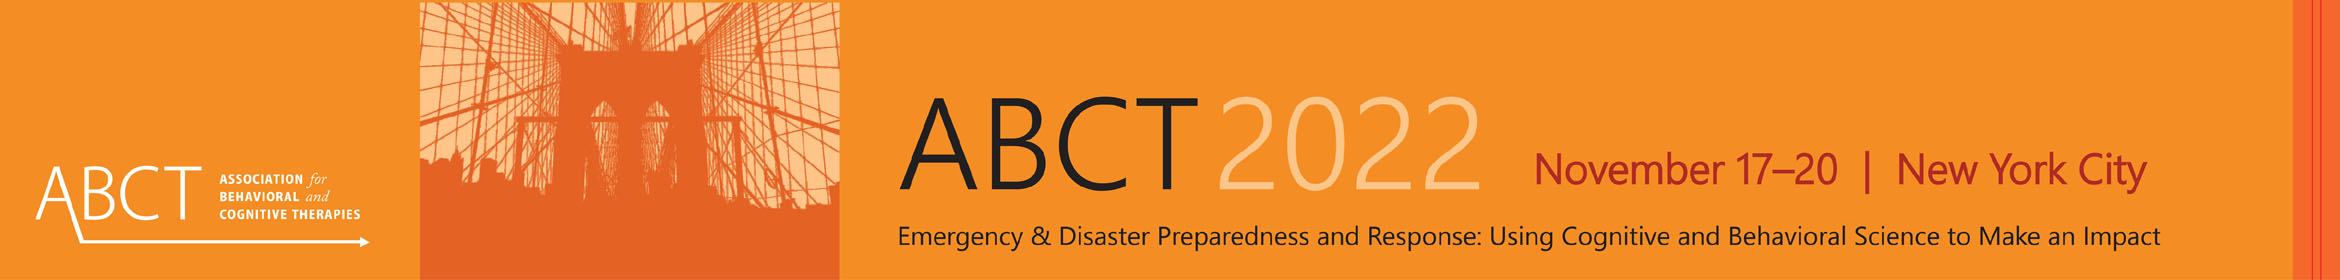 ABCT 56th Annual Convention Main banner